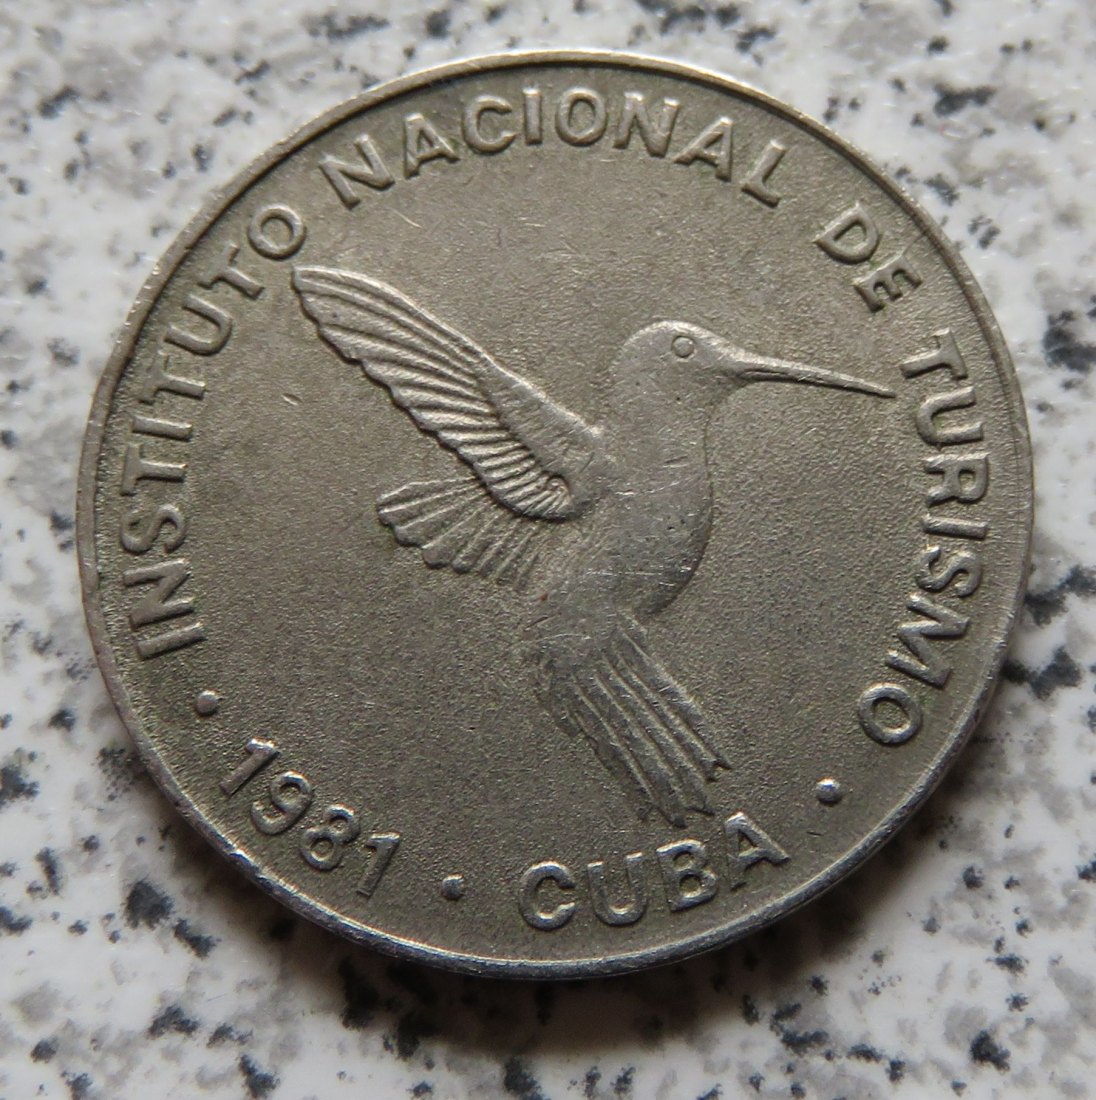  Cuba 10 Centavos 1981   